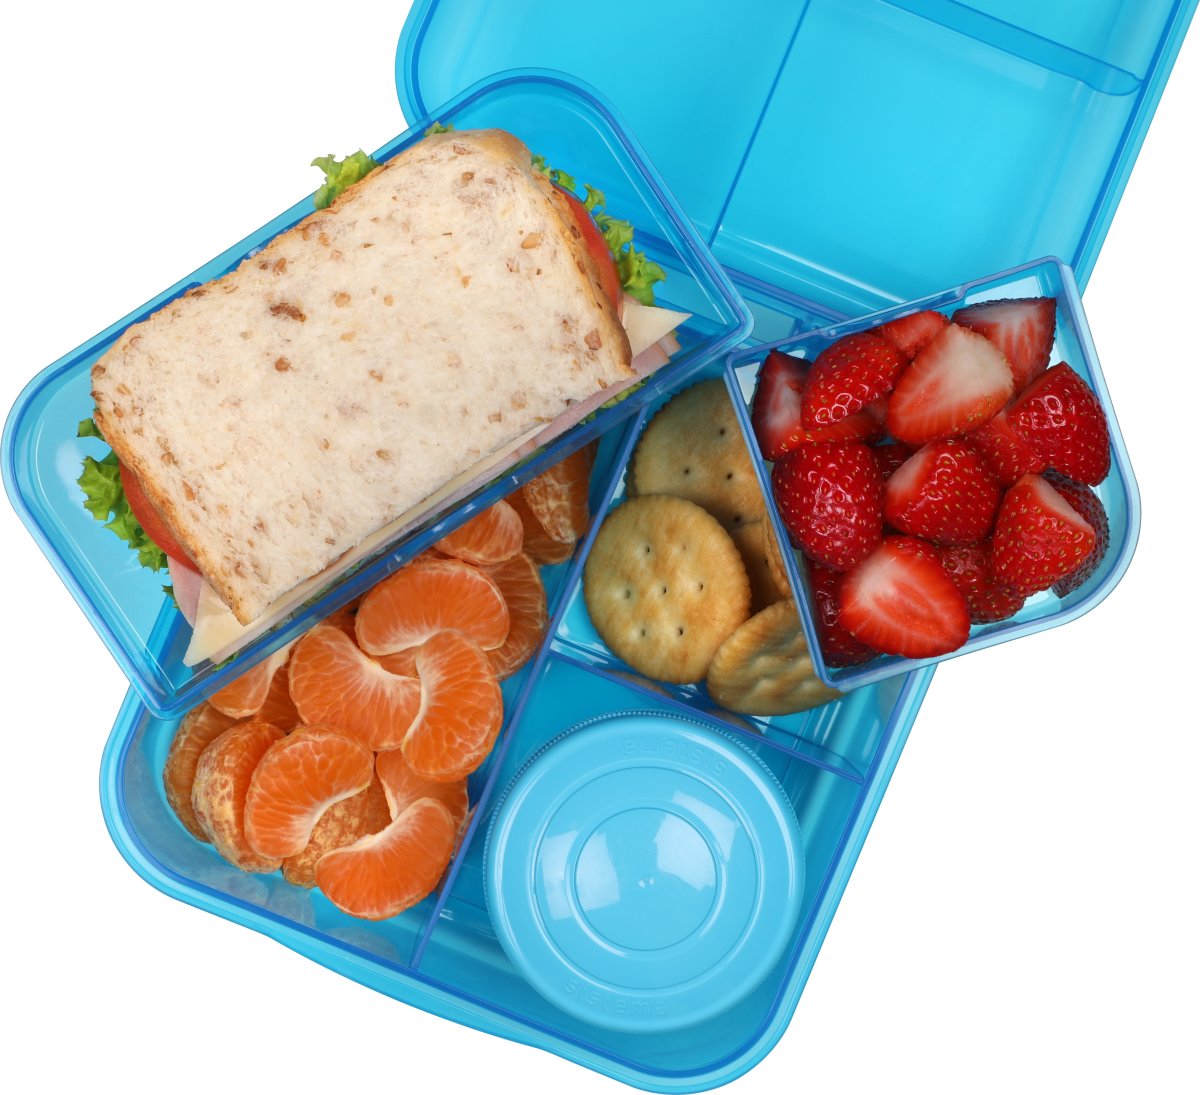 Sistema Bento Cube Lunch matlåda, 1,25L, blå